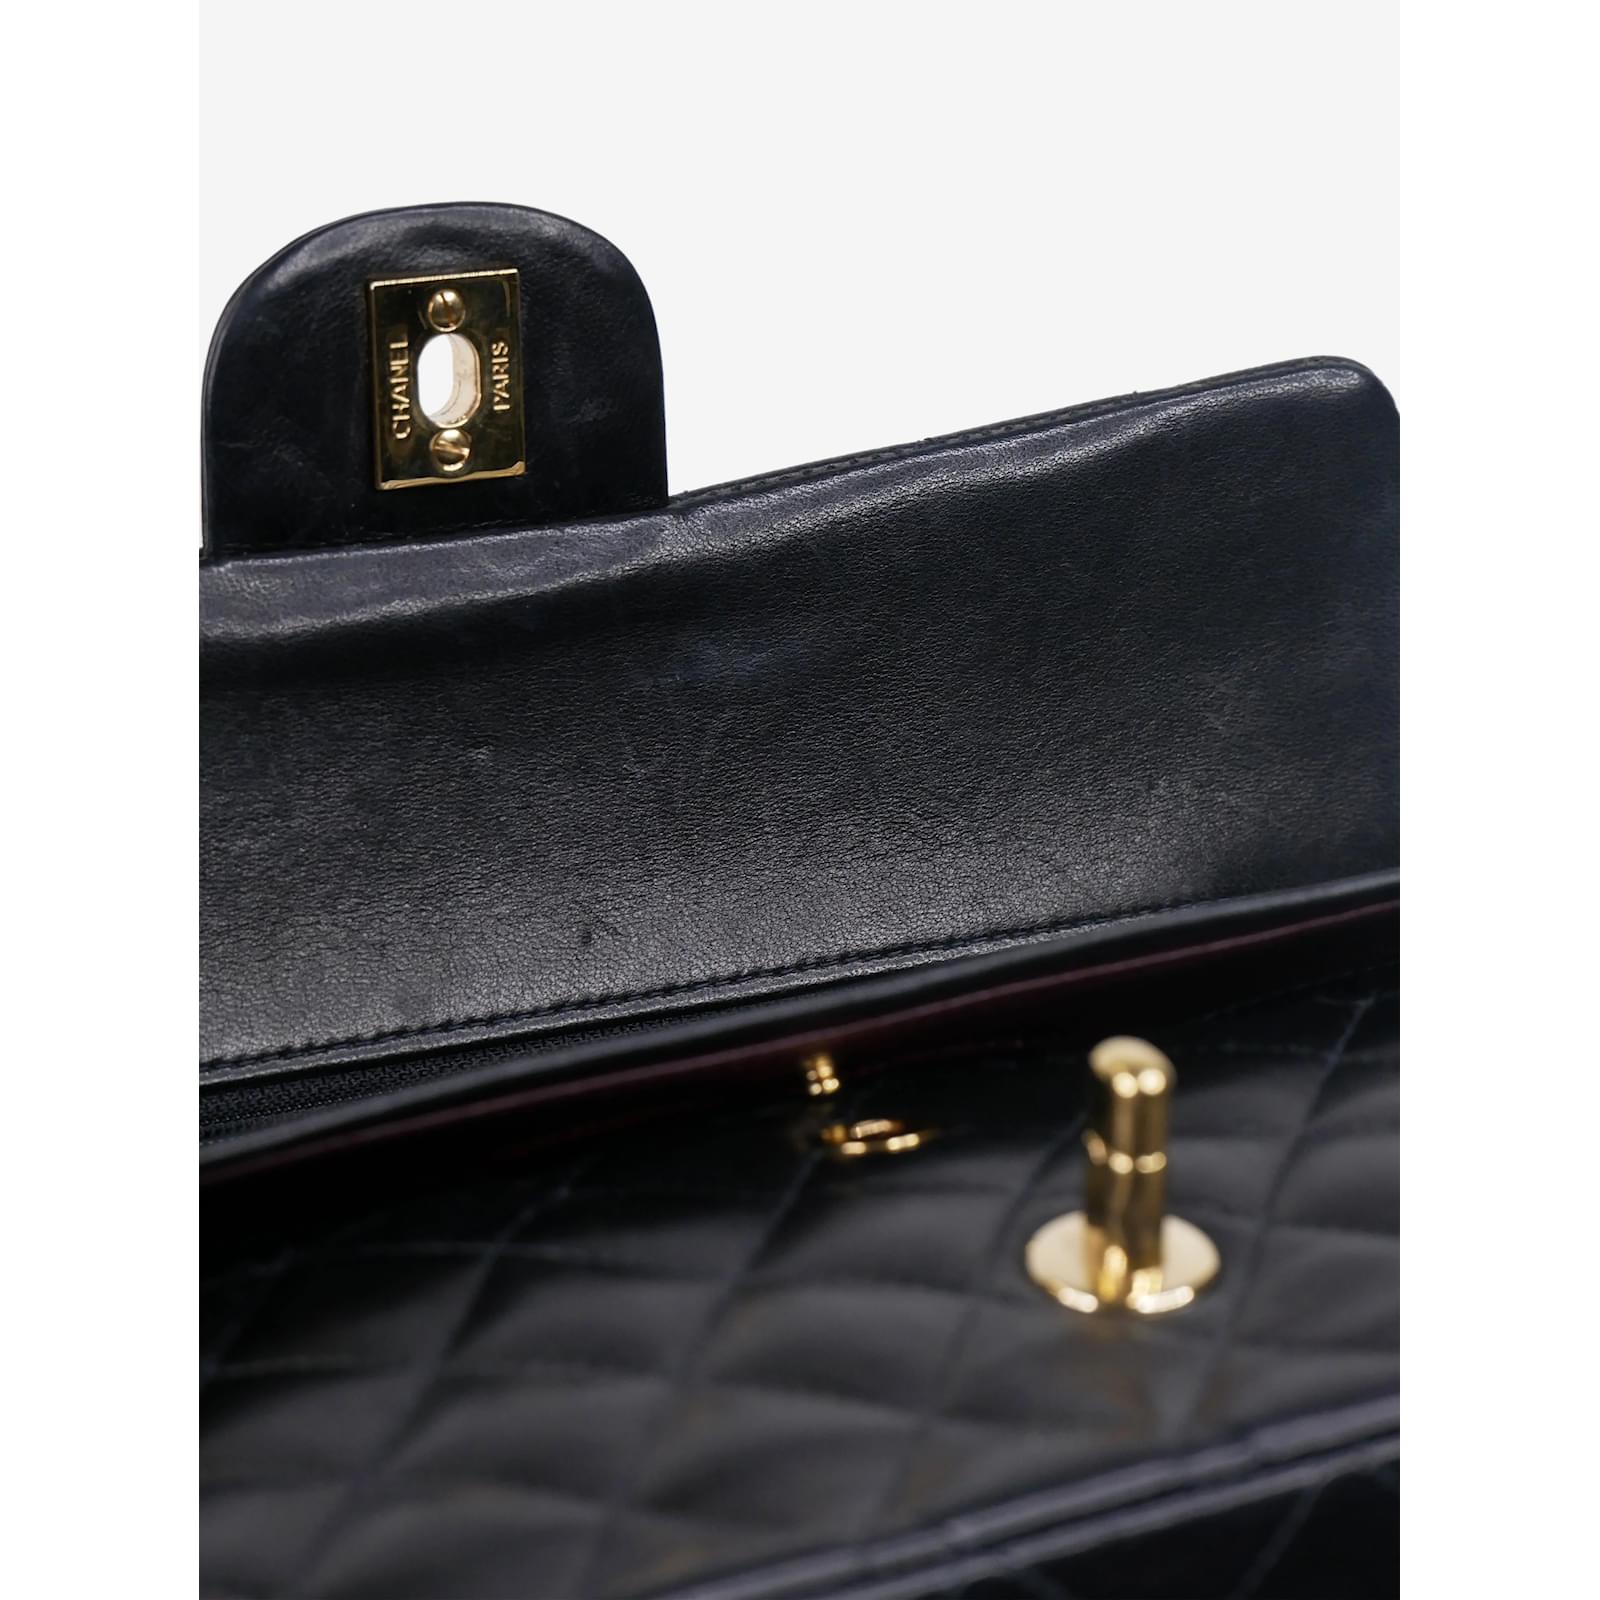 CHANEL Vintage Classic Black Lambskin 24K Gold Chain Crossbody 10.5 Flap  Bag - My Dreamz Closet